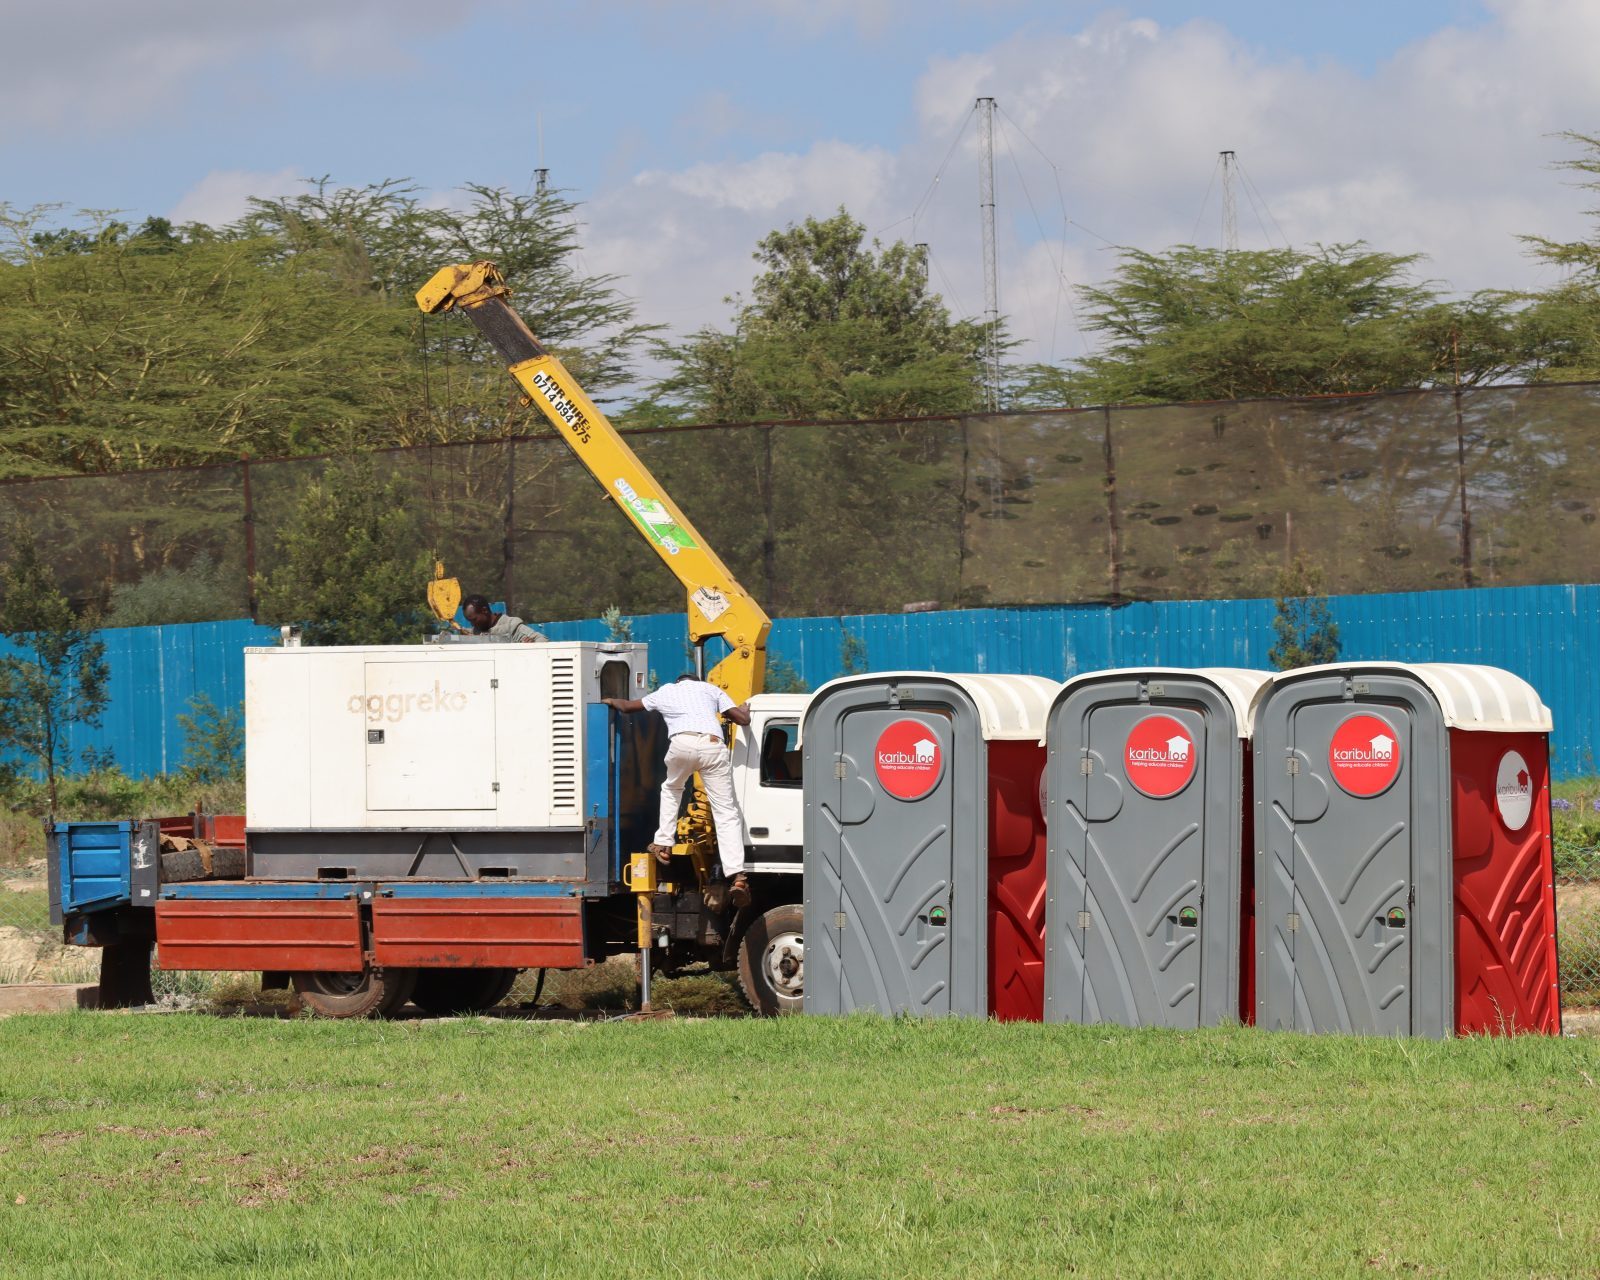 How Portable Toilets Can Improve Urban Sanitation and Health in Kenya